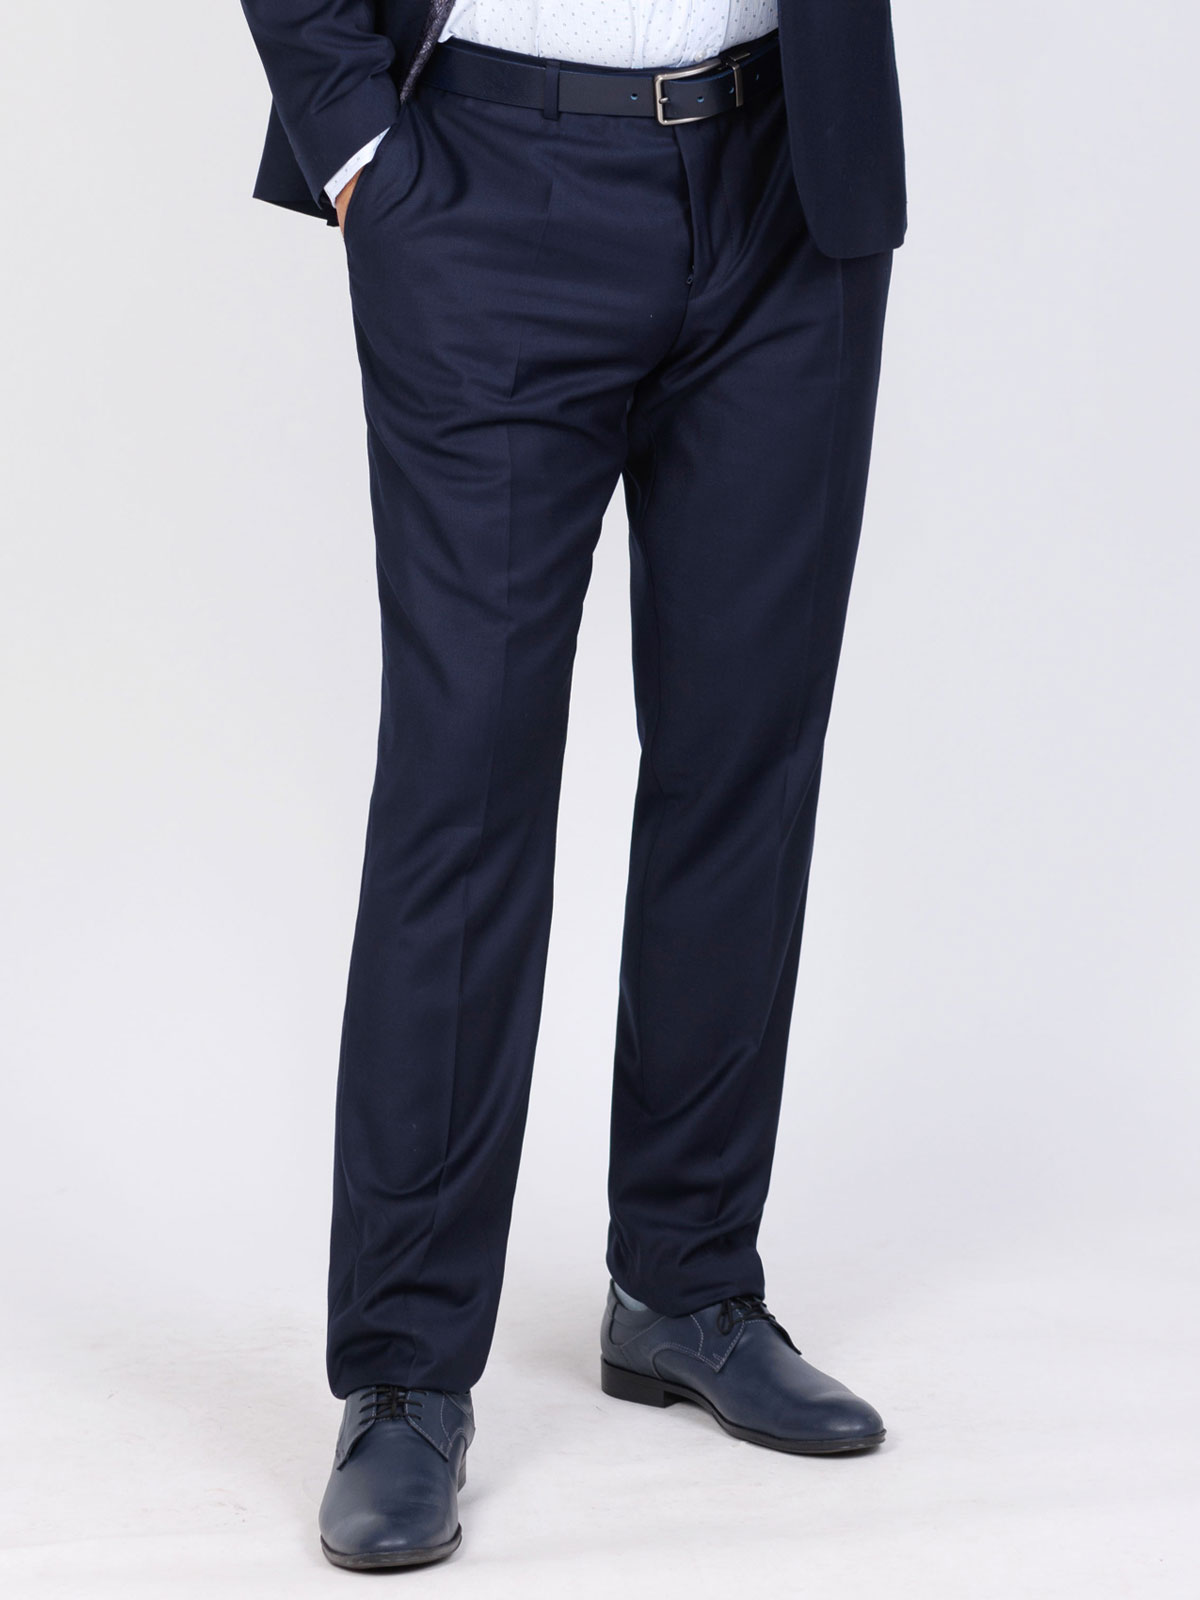 Elegant trousers in blue max - 63339 € 62.99 img2